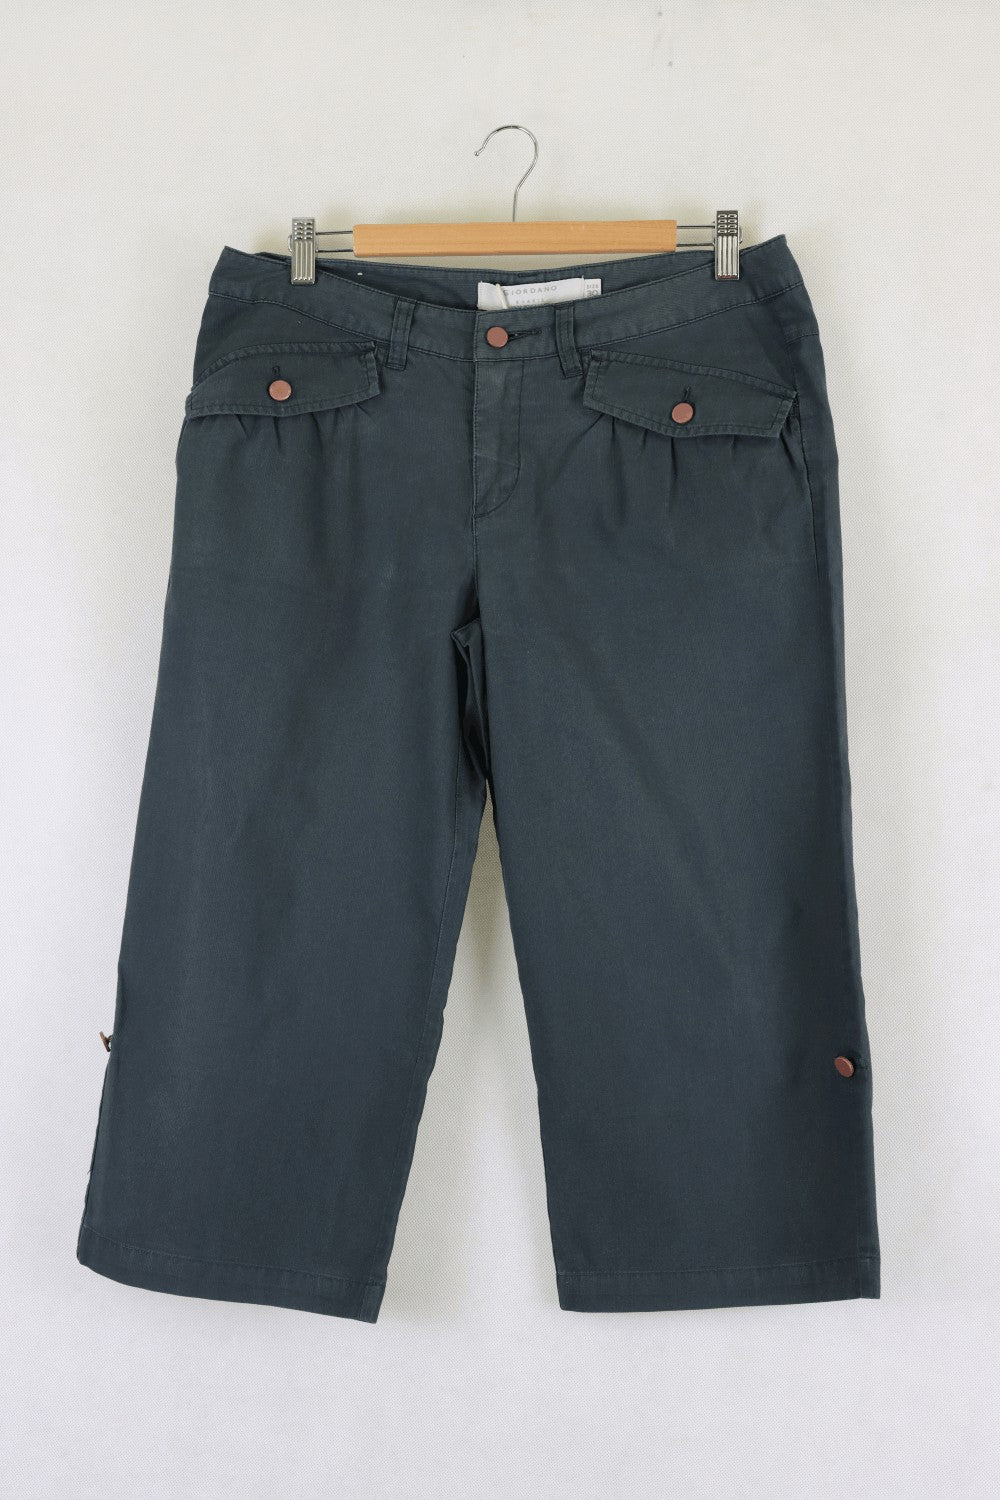 Giordano Cargo Pants 30 (AU12)